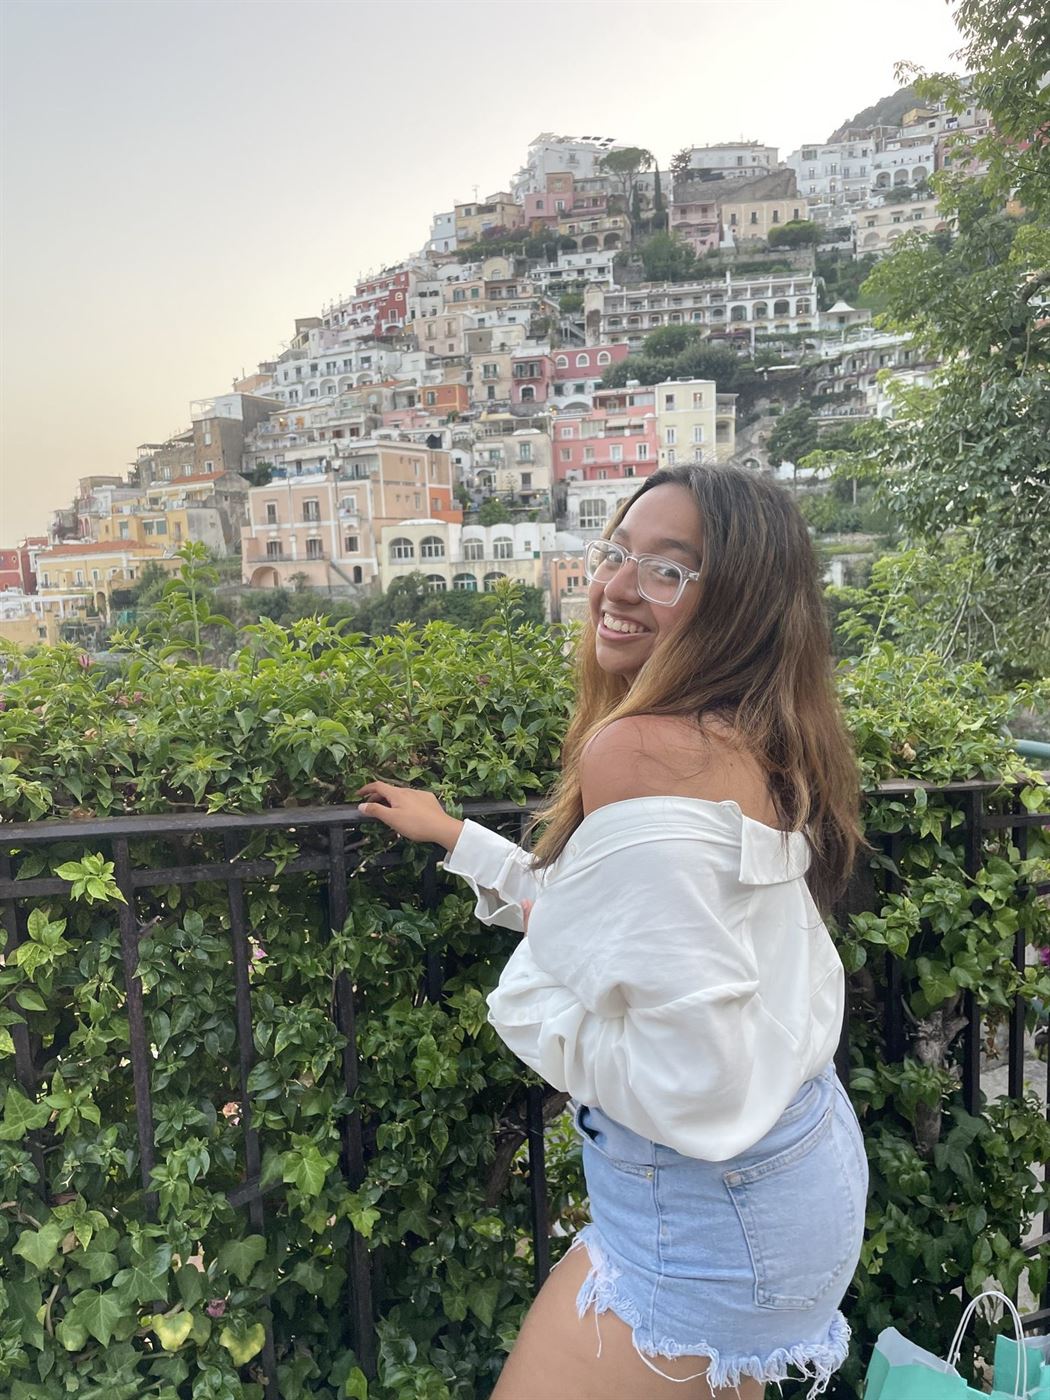 Mariana Luna-Martinez travels to her favorite place, the Amalfi Coast. Photo courtesy of Mariana Luna-Martinez